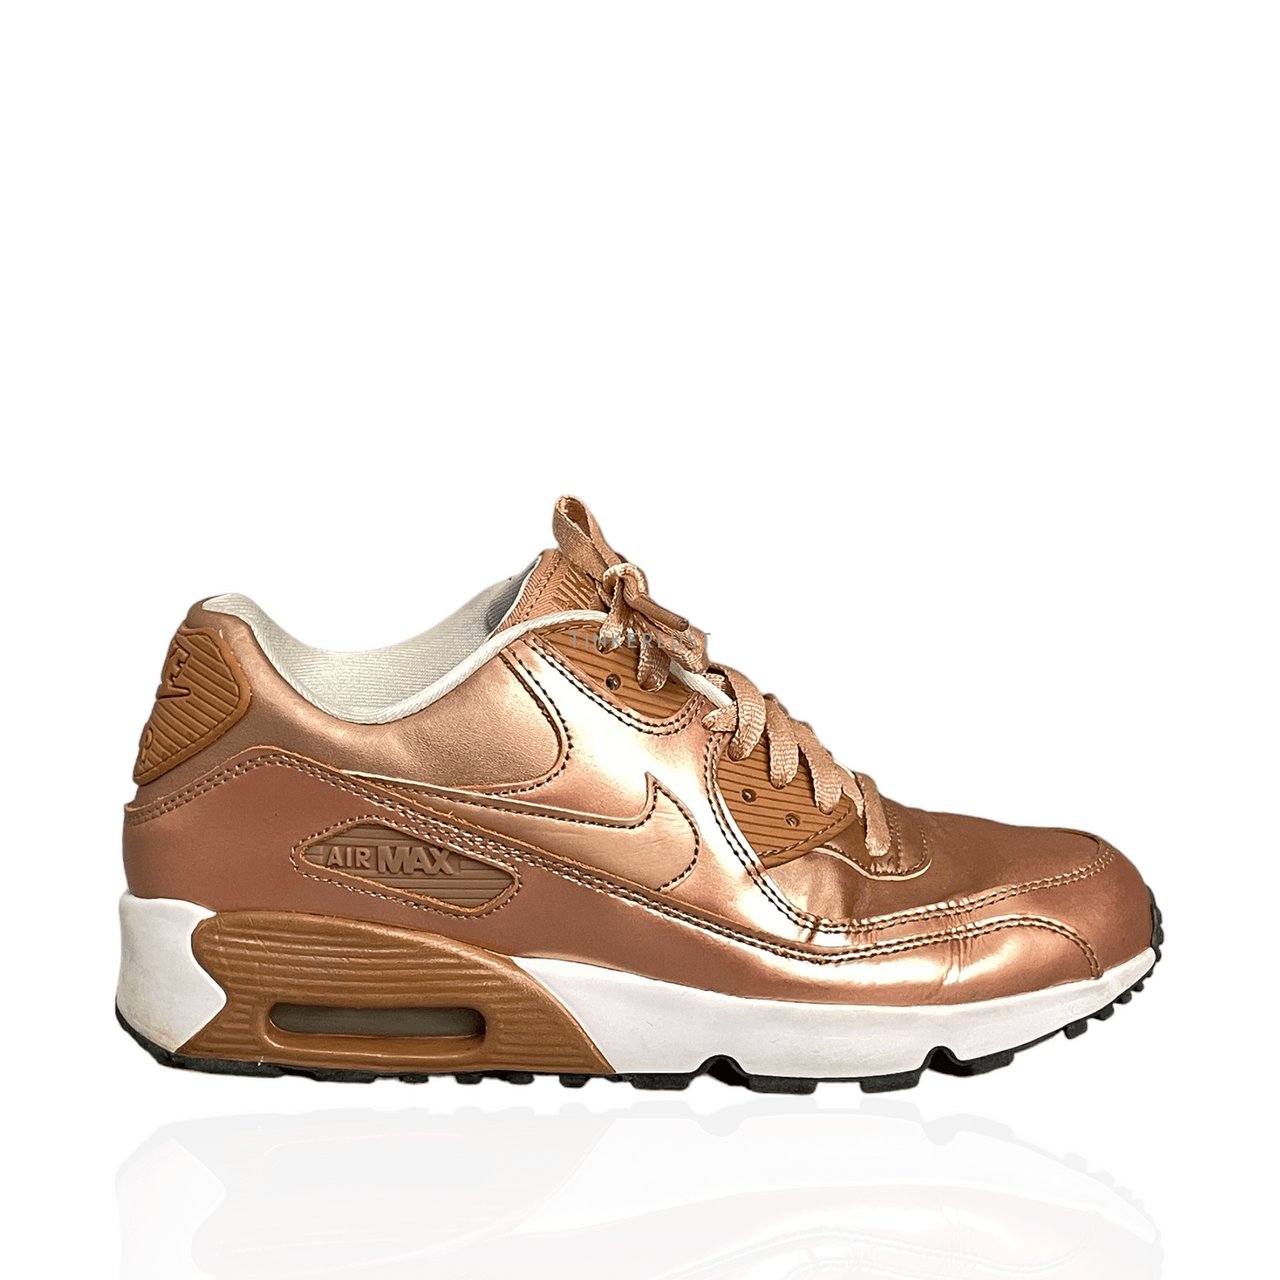 Nike Air Max 90 GS “Metallic Bronze” Shoes